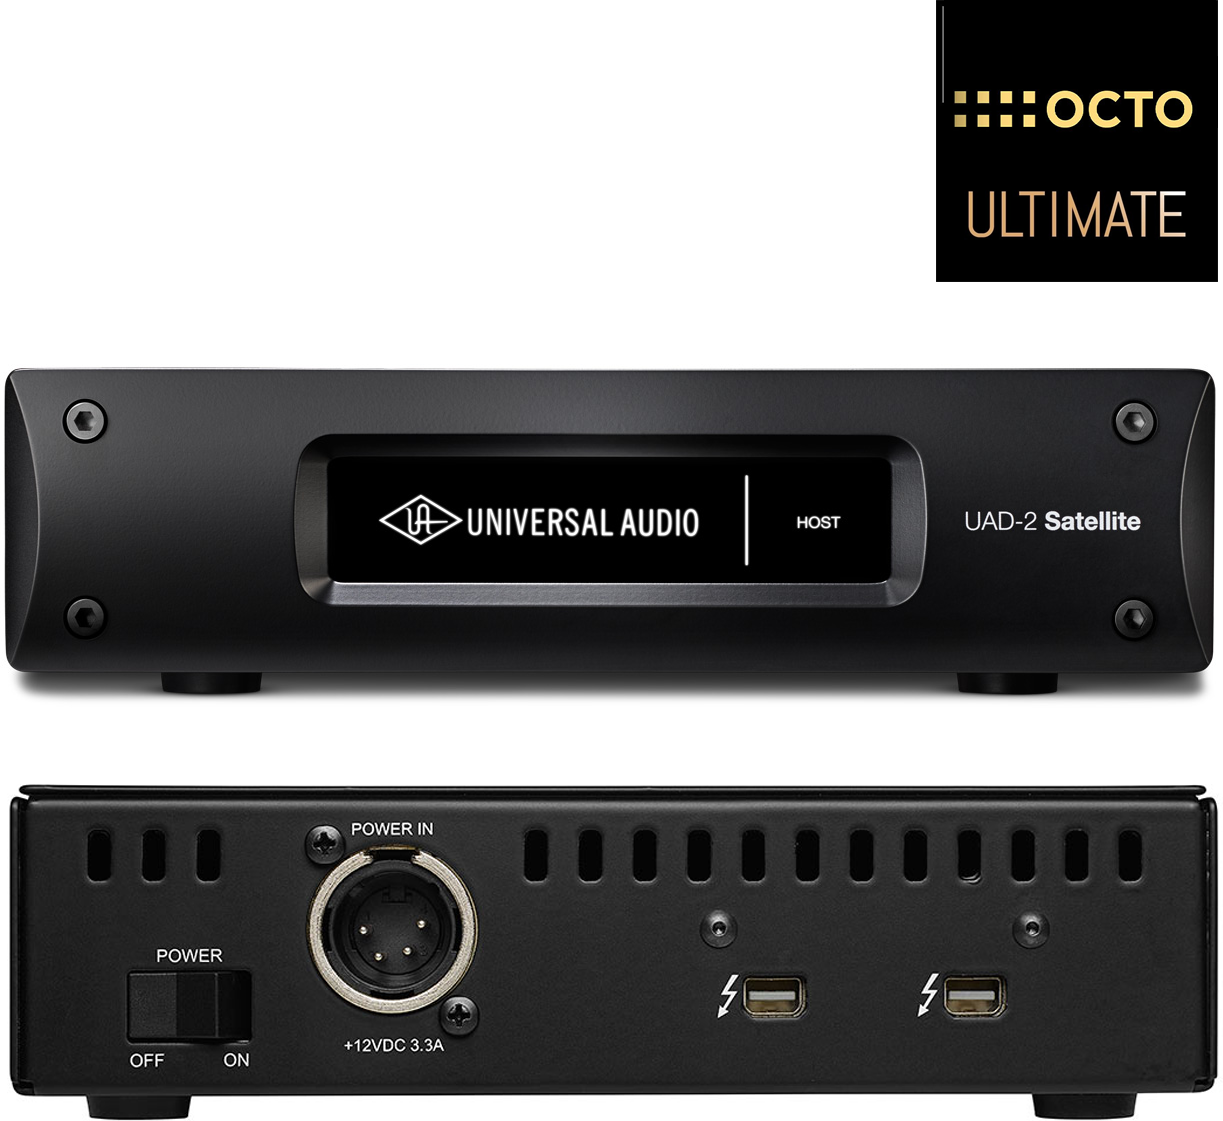 Universal Audio Uad-2 Satellite Thunderbolt Octo Ultimate 7 - USB audio interface - Main picture